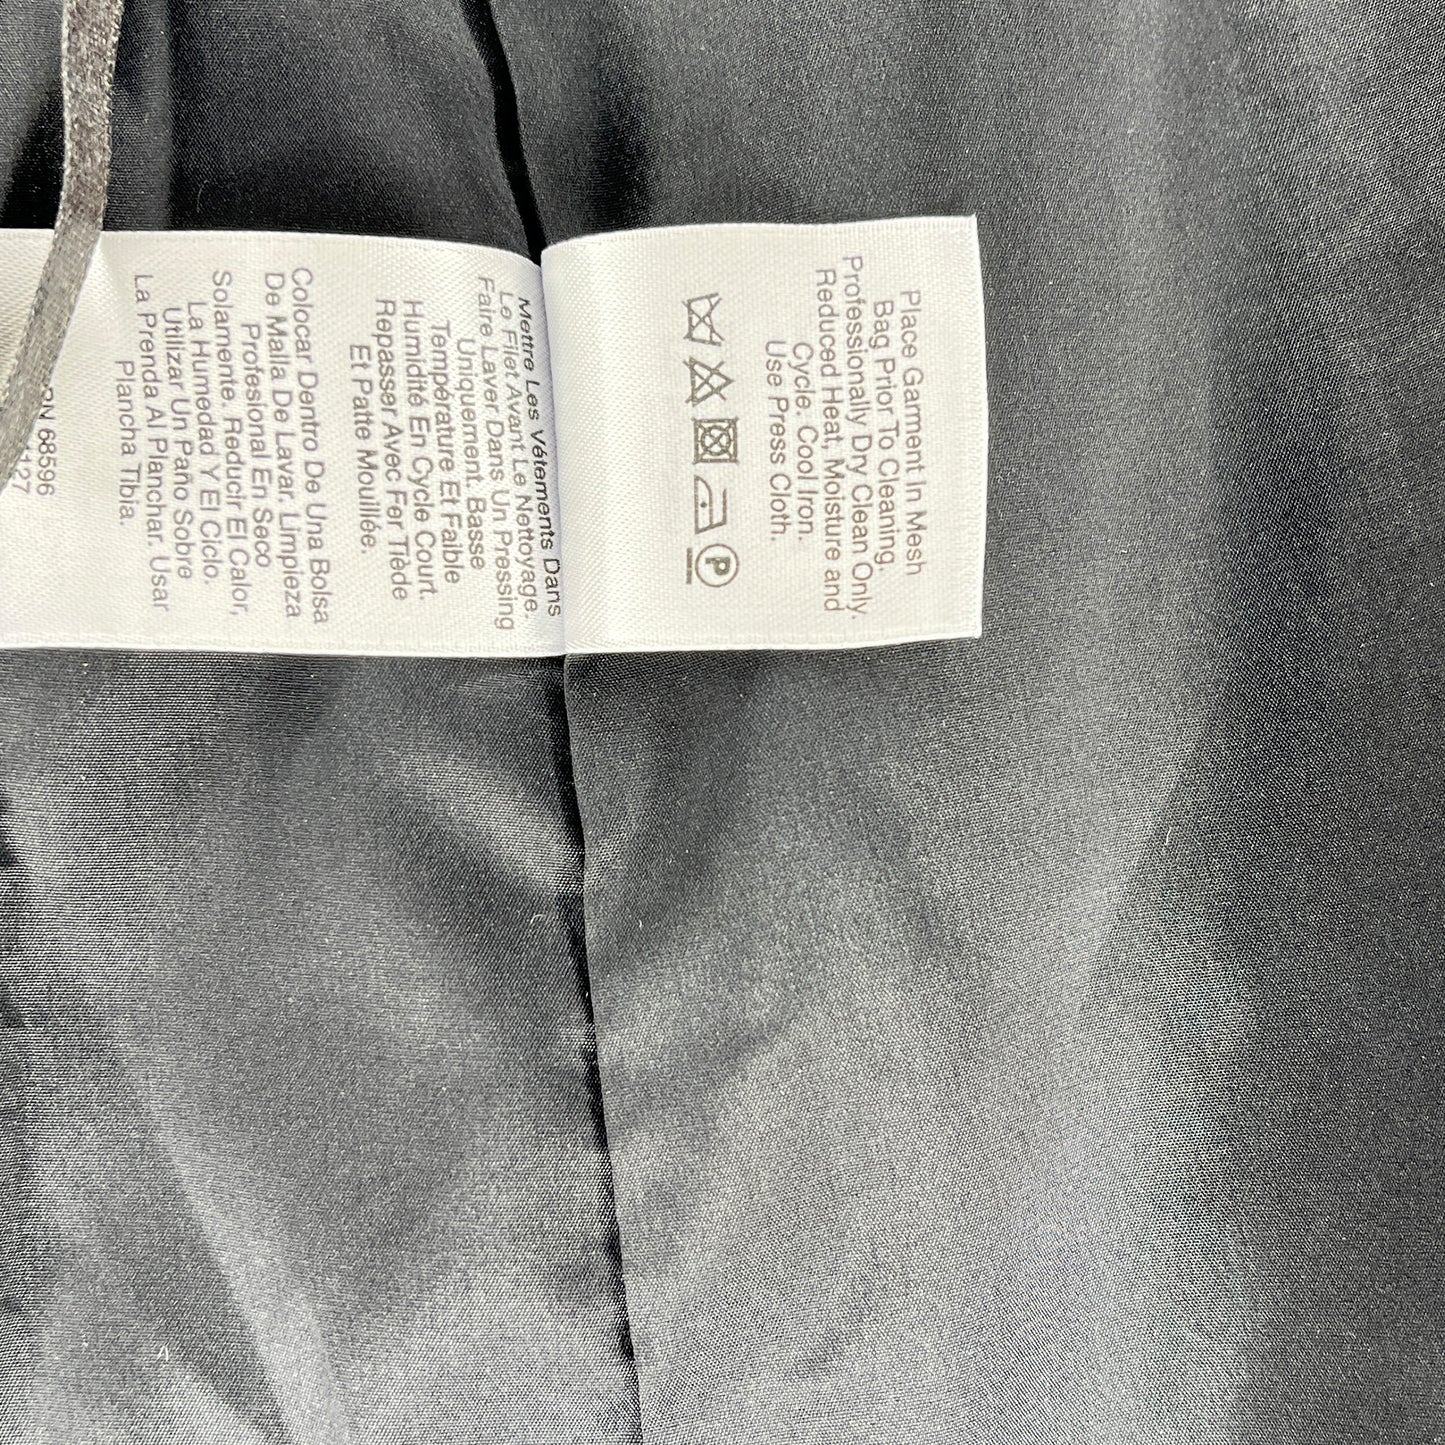 DKNY Pencil Skirt Gray Size 2 SKU 000236-6